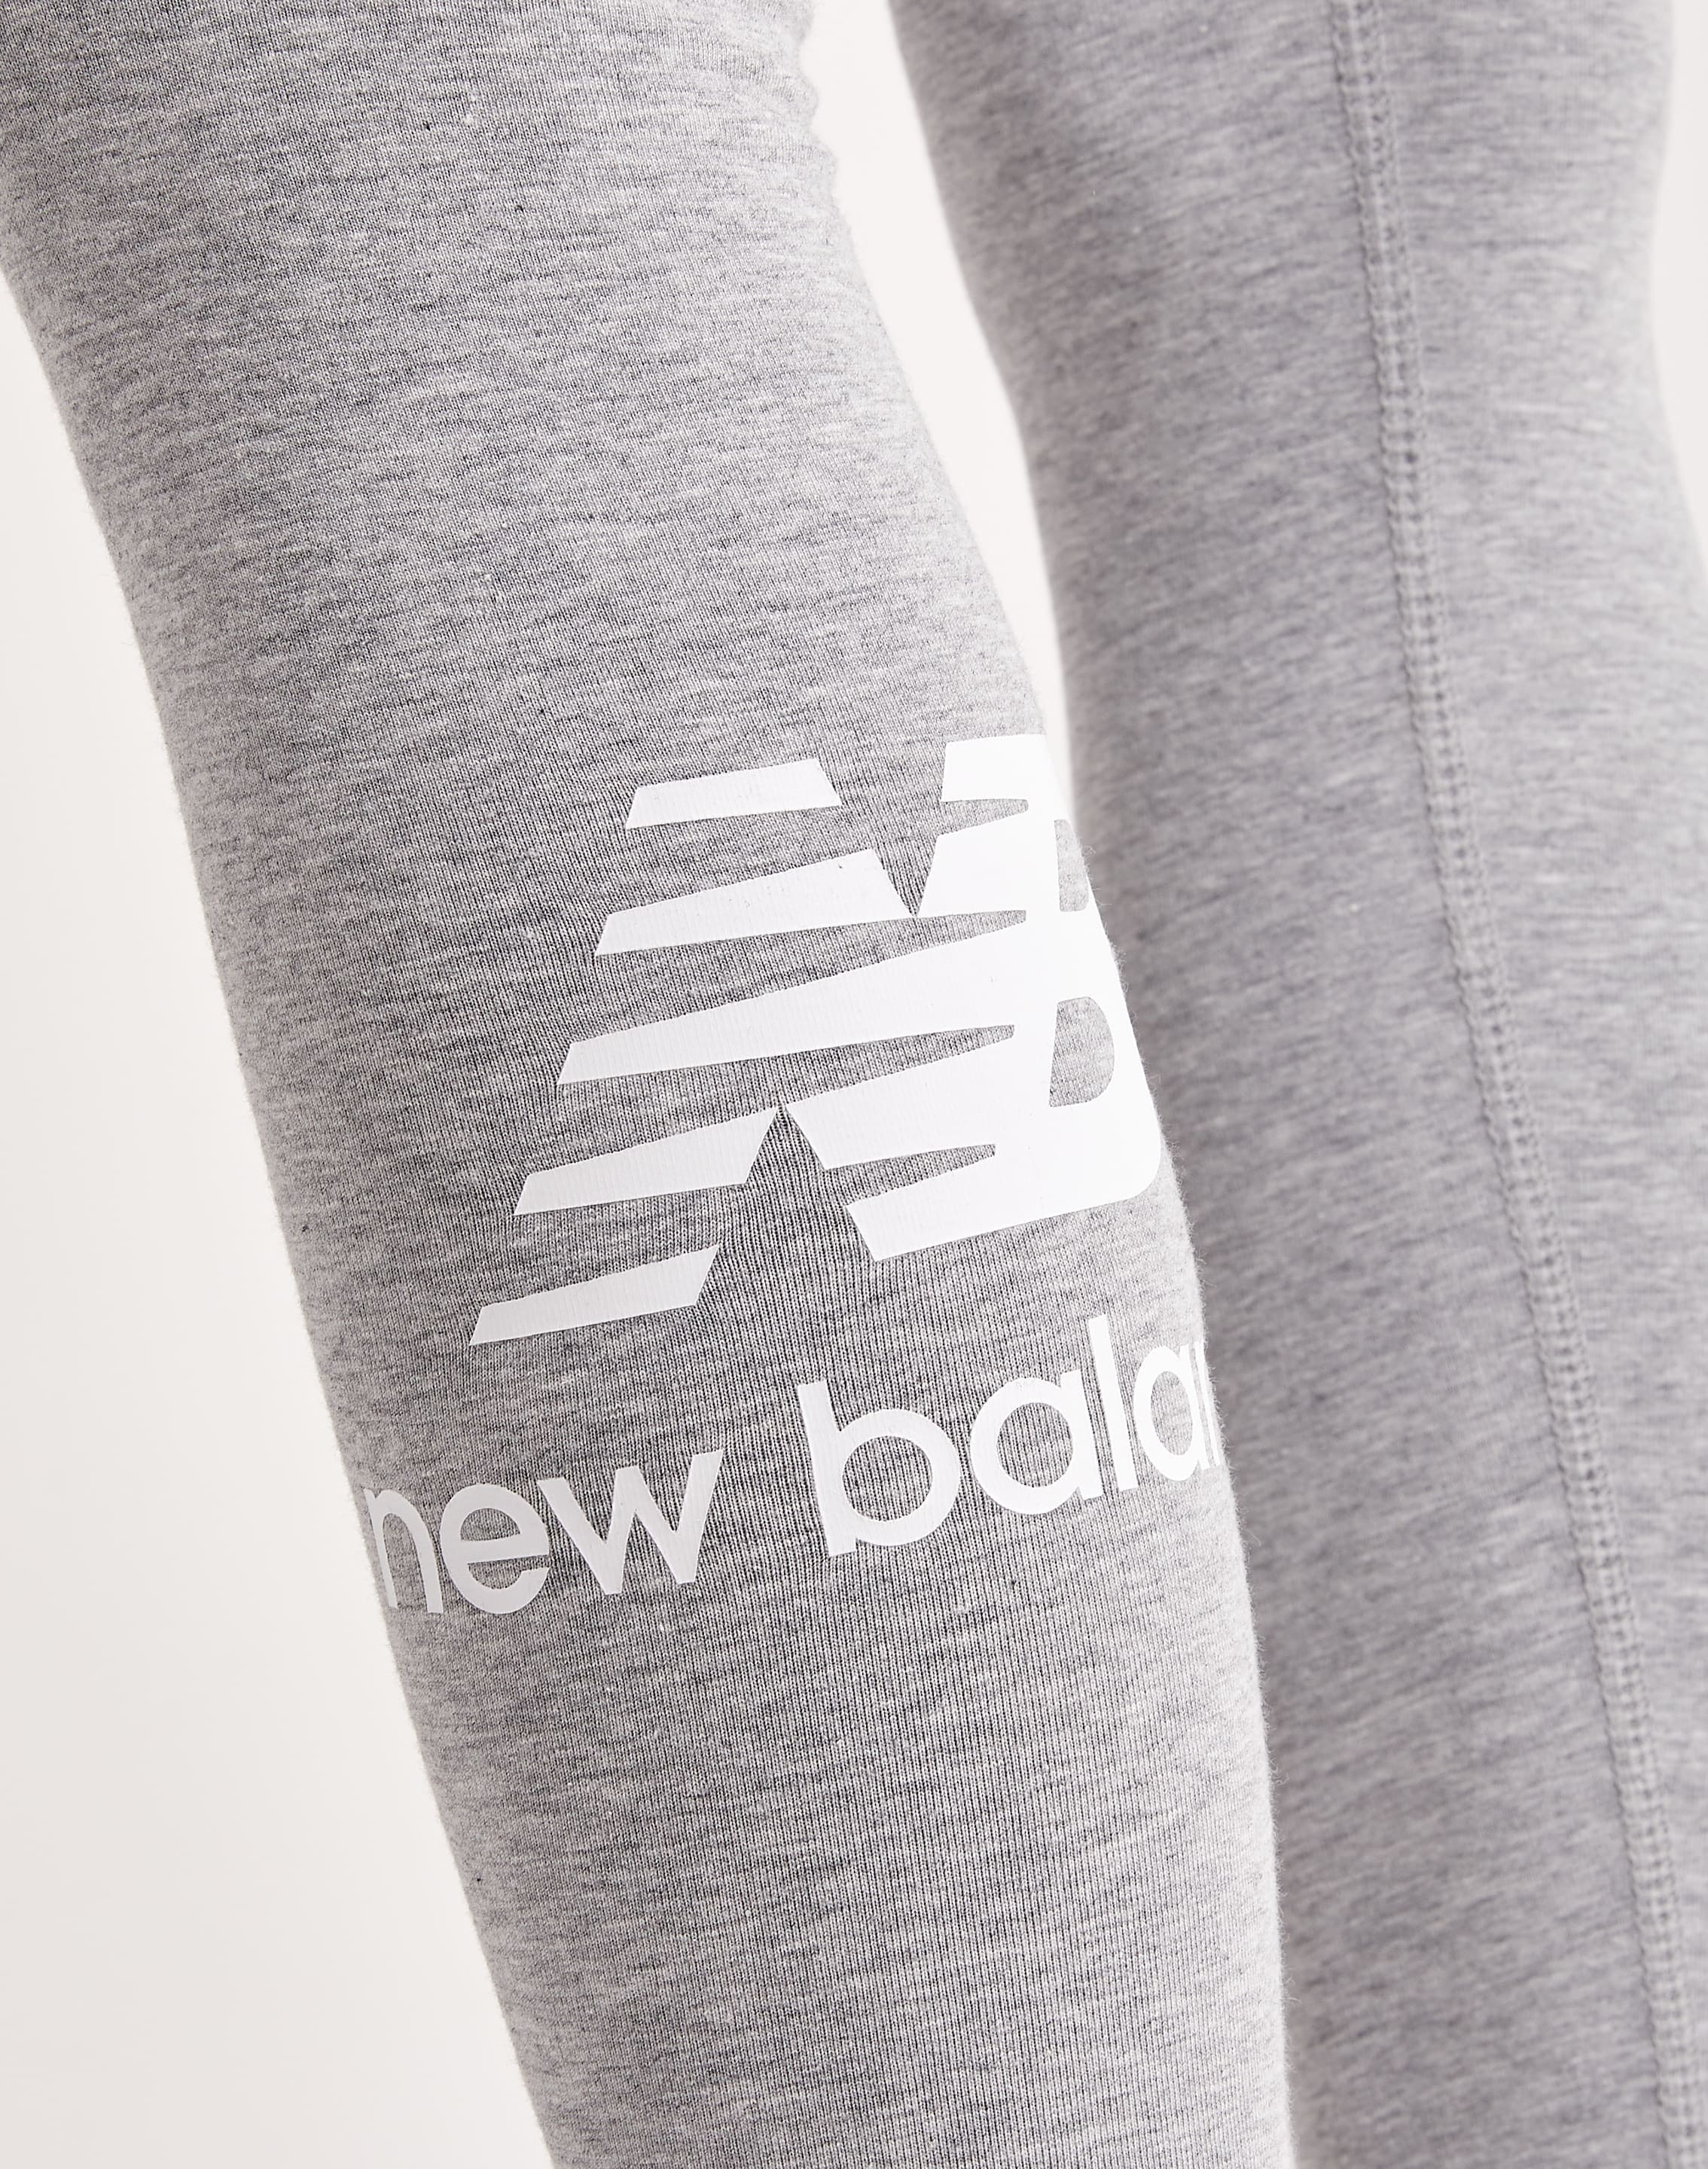 New Balance NB Essentials Stacked Women's Leggings